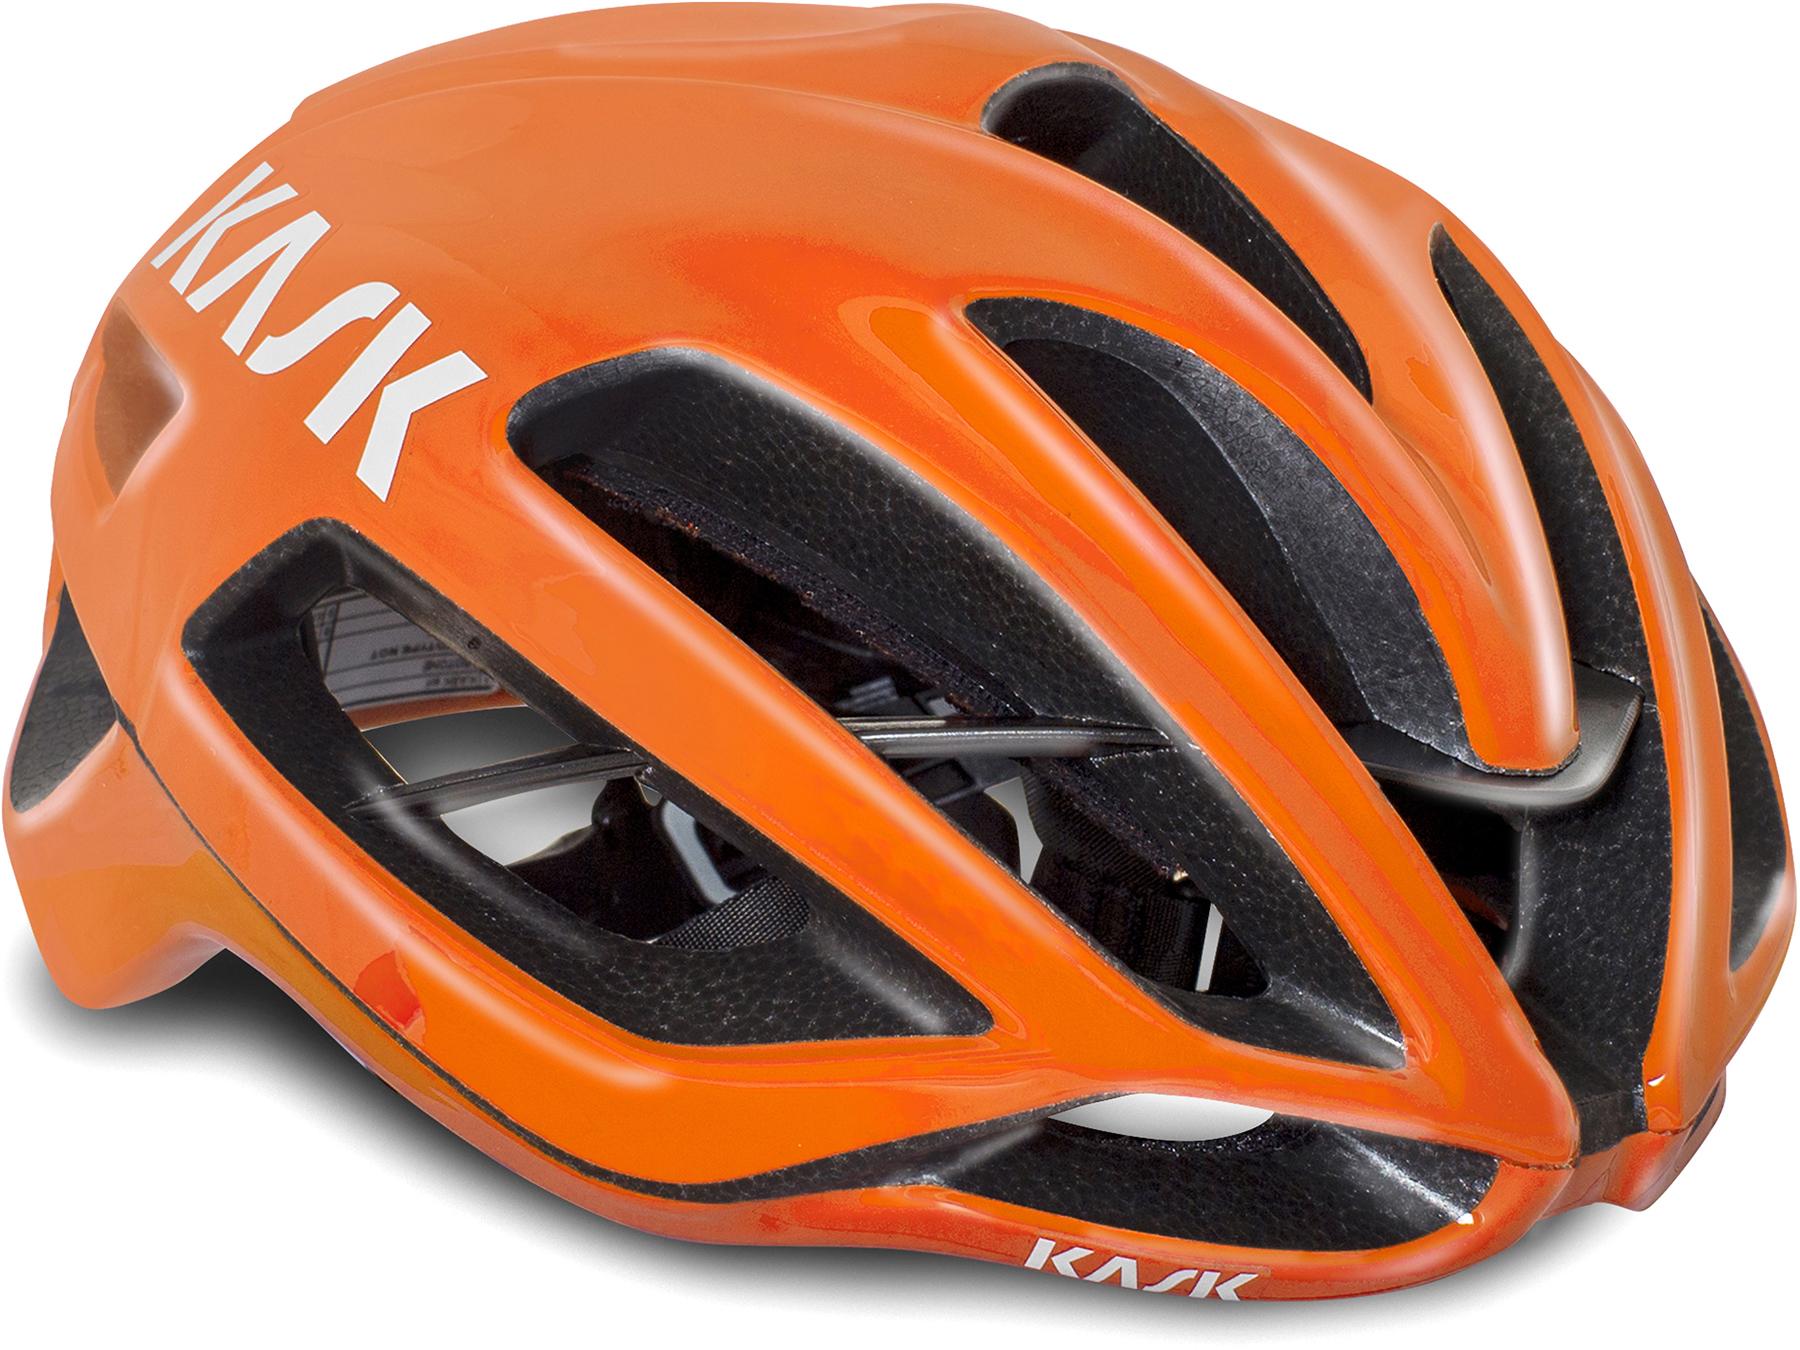 Kask Protone Road Helmet (wg11) - Orange Fluo